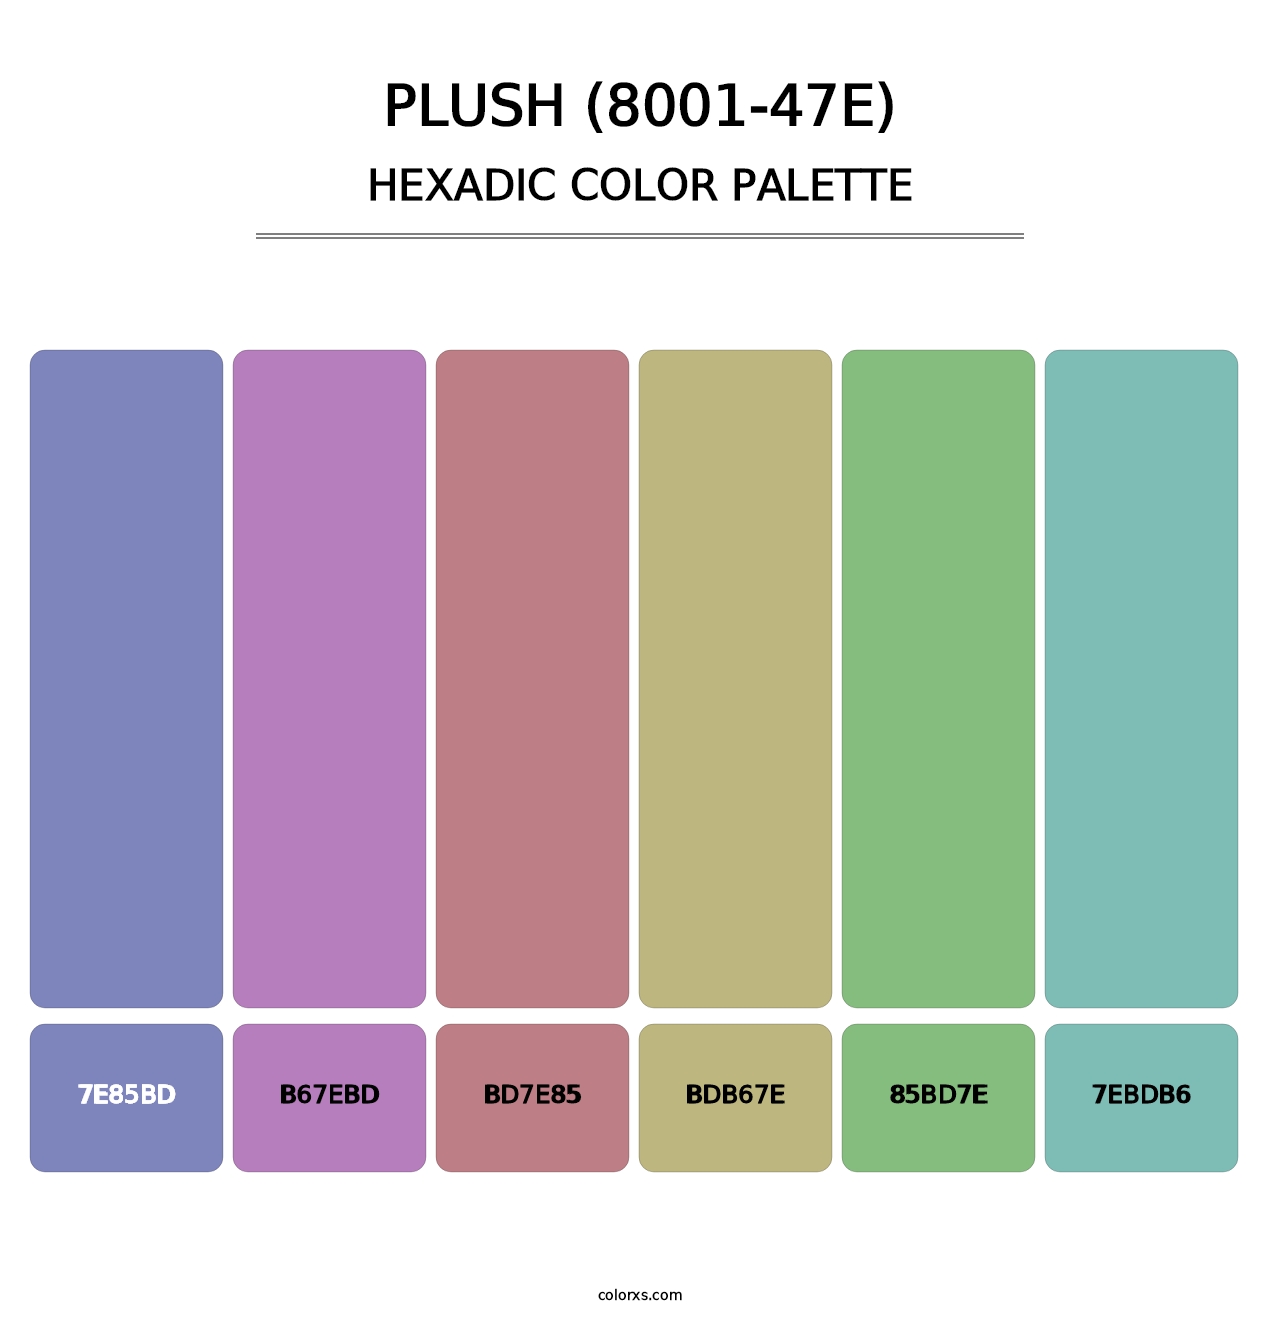 Plush (8001-47E) - Hexadic Color Palette